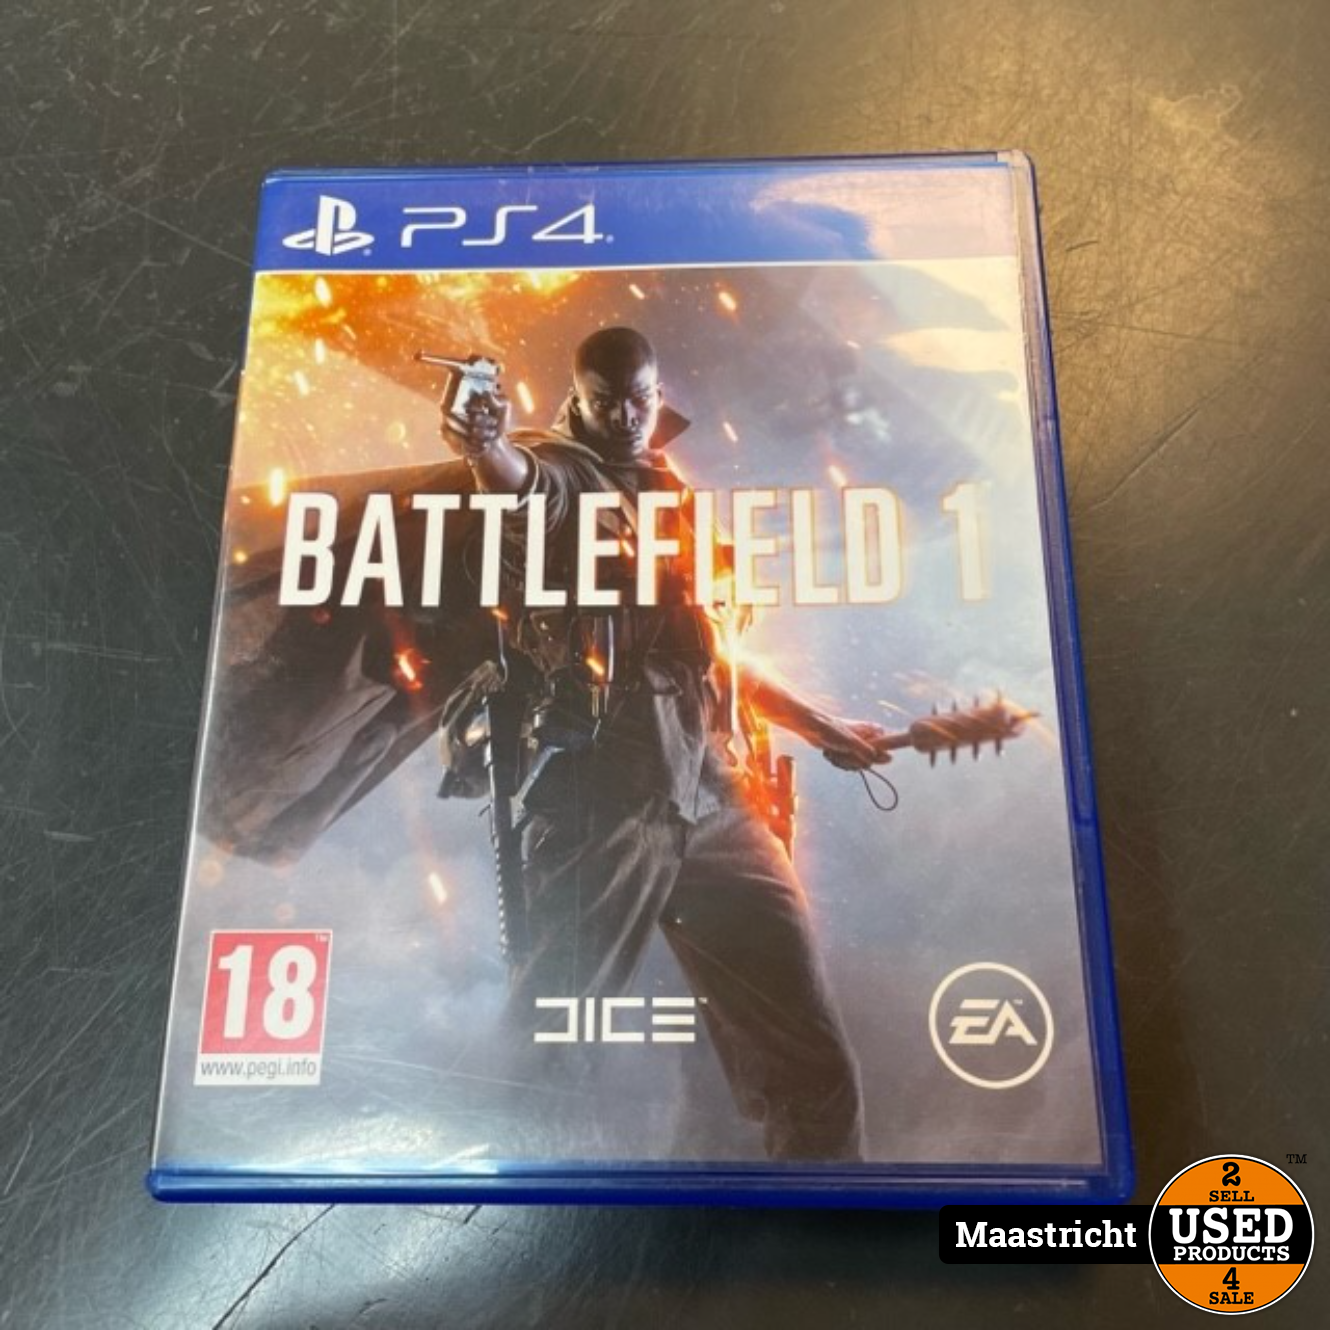 Zeeslak Kiezen kom Battlefield 1 PS4 Game - Used Products Maastricht